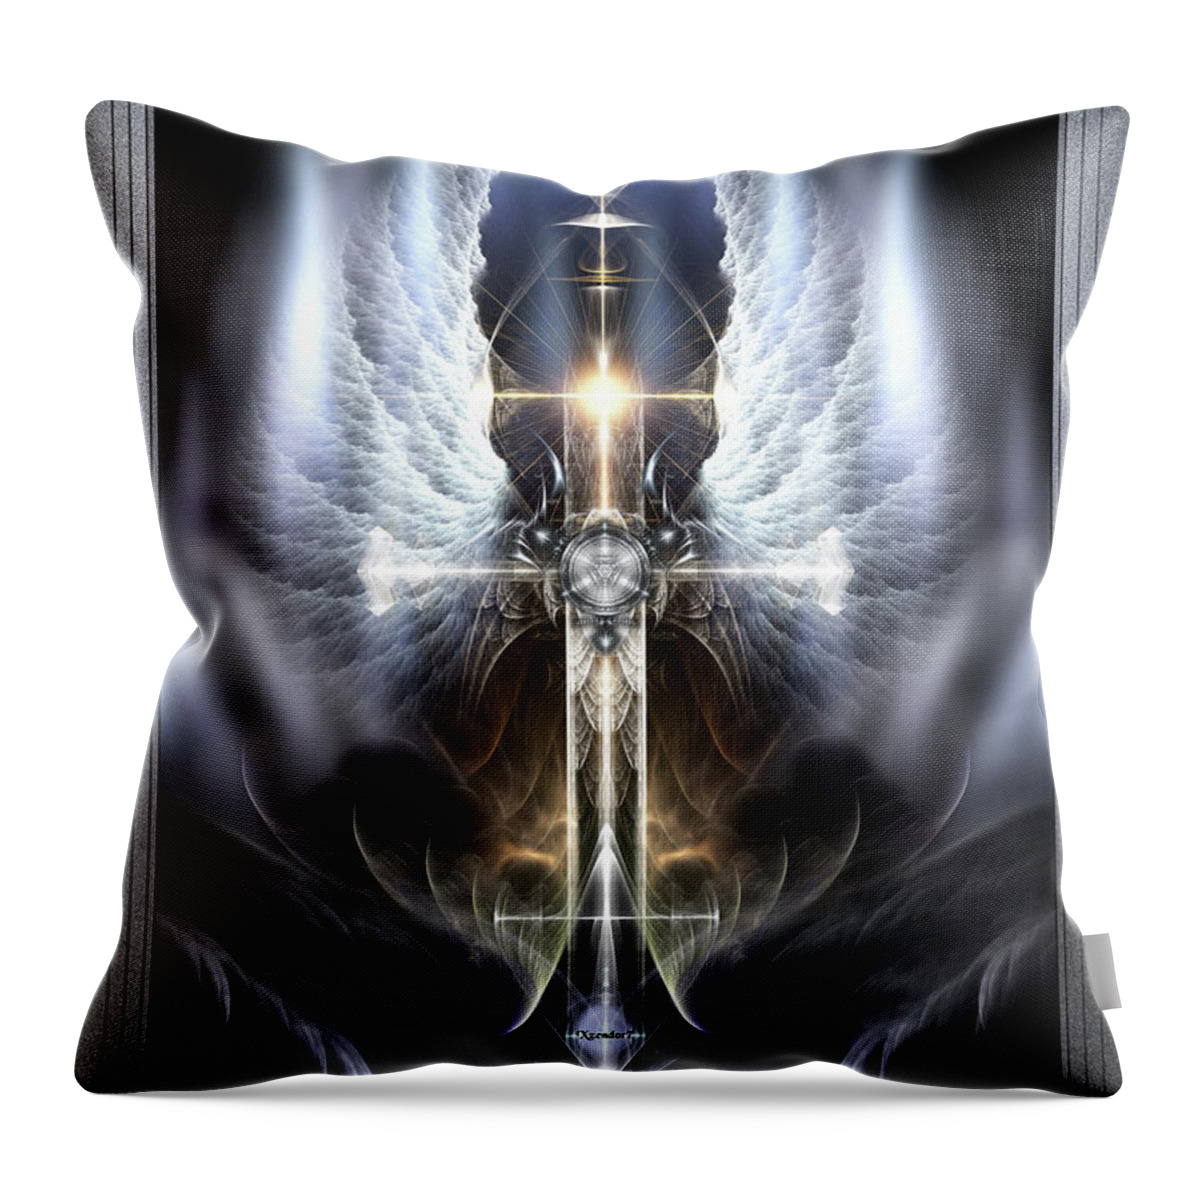 Heaven Throw Pillow featuring the digital art Heavenly Angel Wings Cross by Rolando Burbon